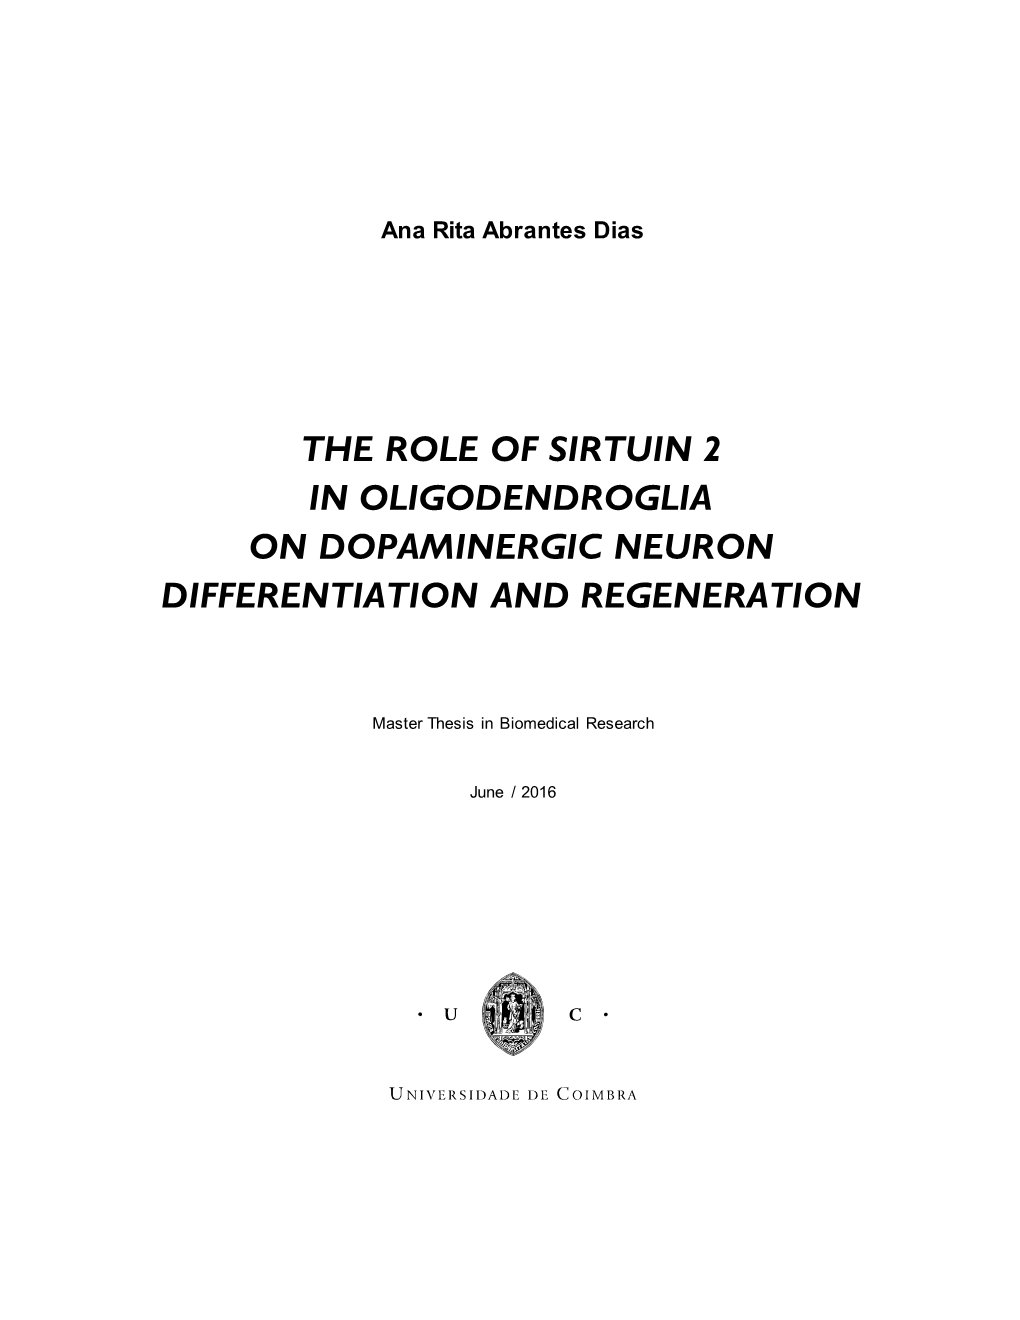 The Role of Sirtuin 2 in Oligodendroglia on Dopaminergic Neuron Differentiation and Regeneration